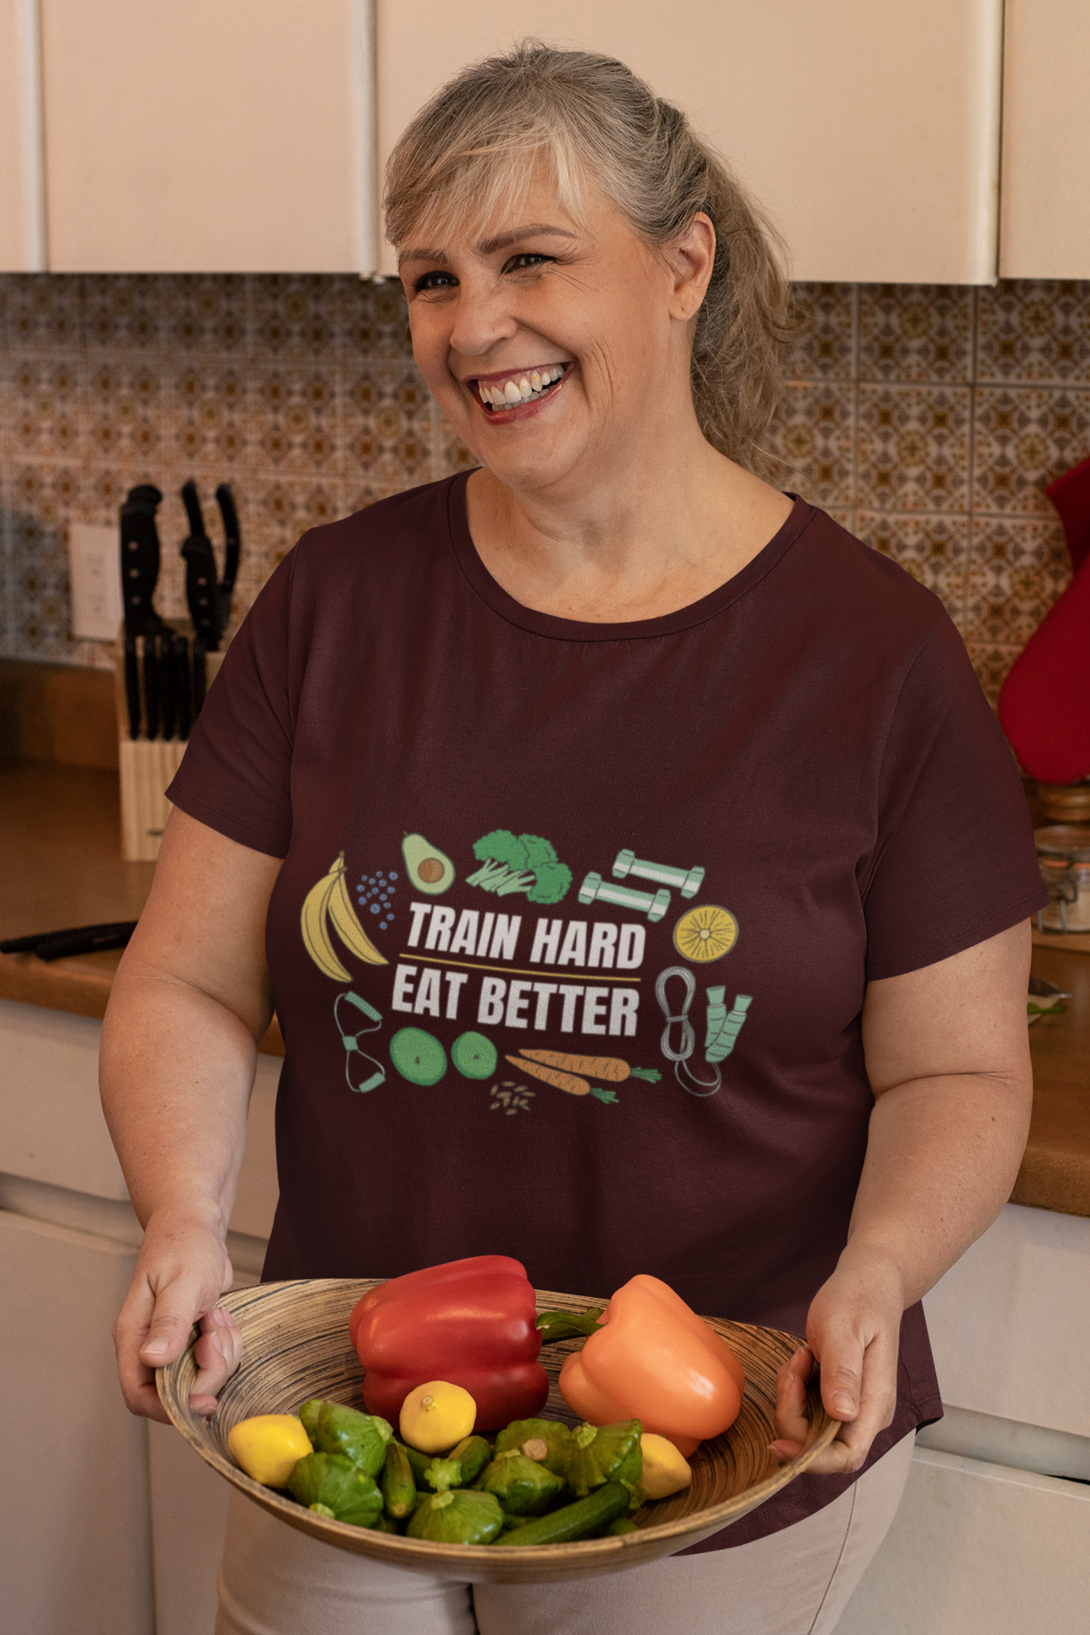 Train Hard, Eat Better Printed Scoop Neck T-Shirt For Women - WowWaves - 2